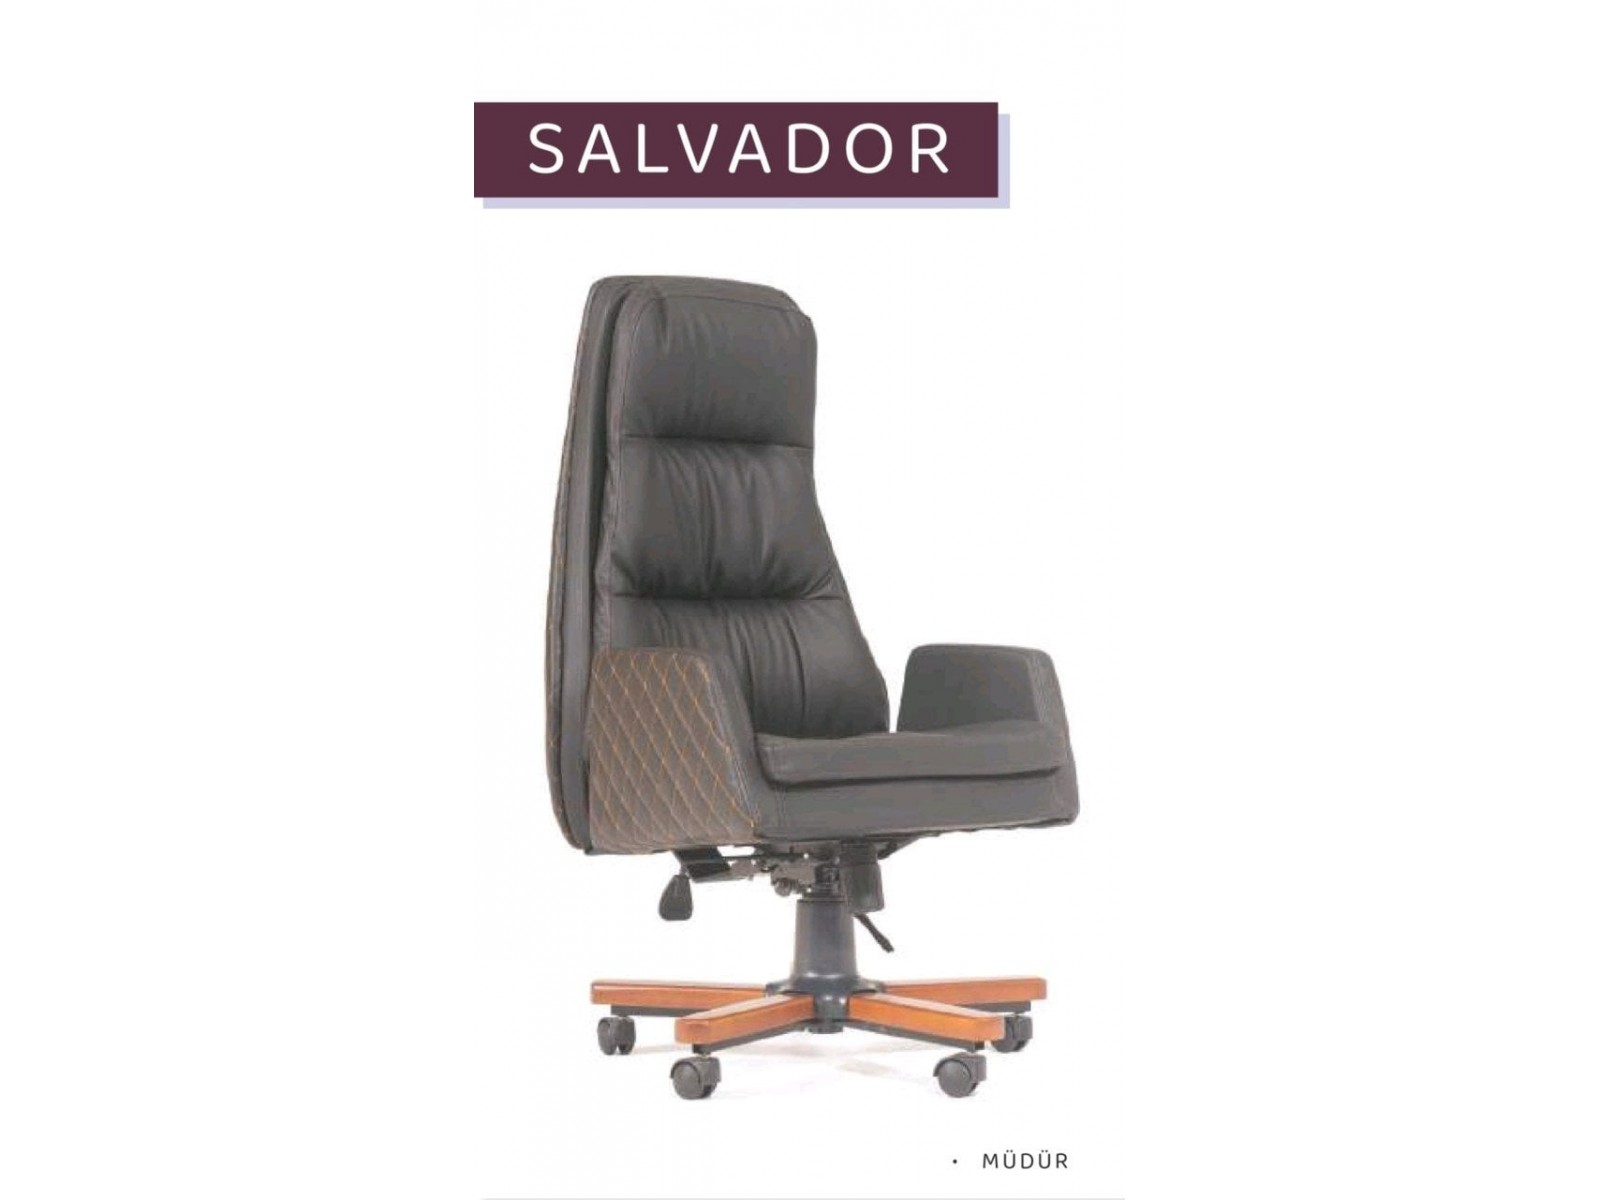 Salvador makam koltuğu